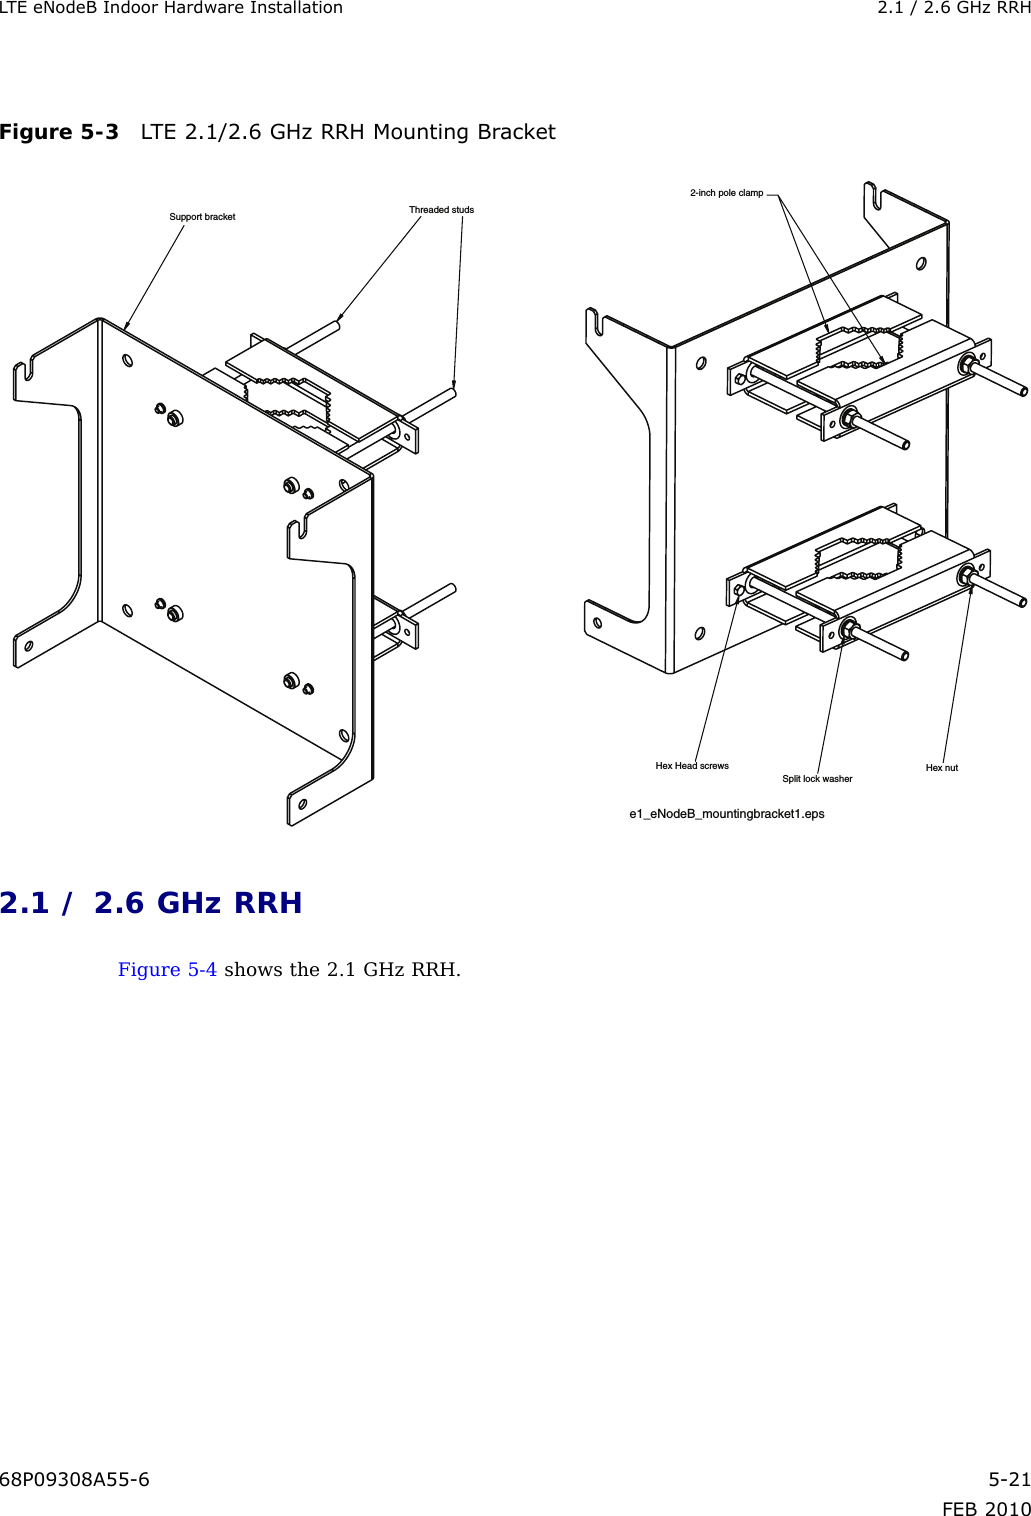                 Support bracket Threaded studs2-inch pole clampHex Head screwsSplit lock washerHex nute1_eNodeB_mountingbracket1.eps             